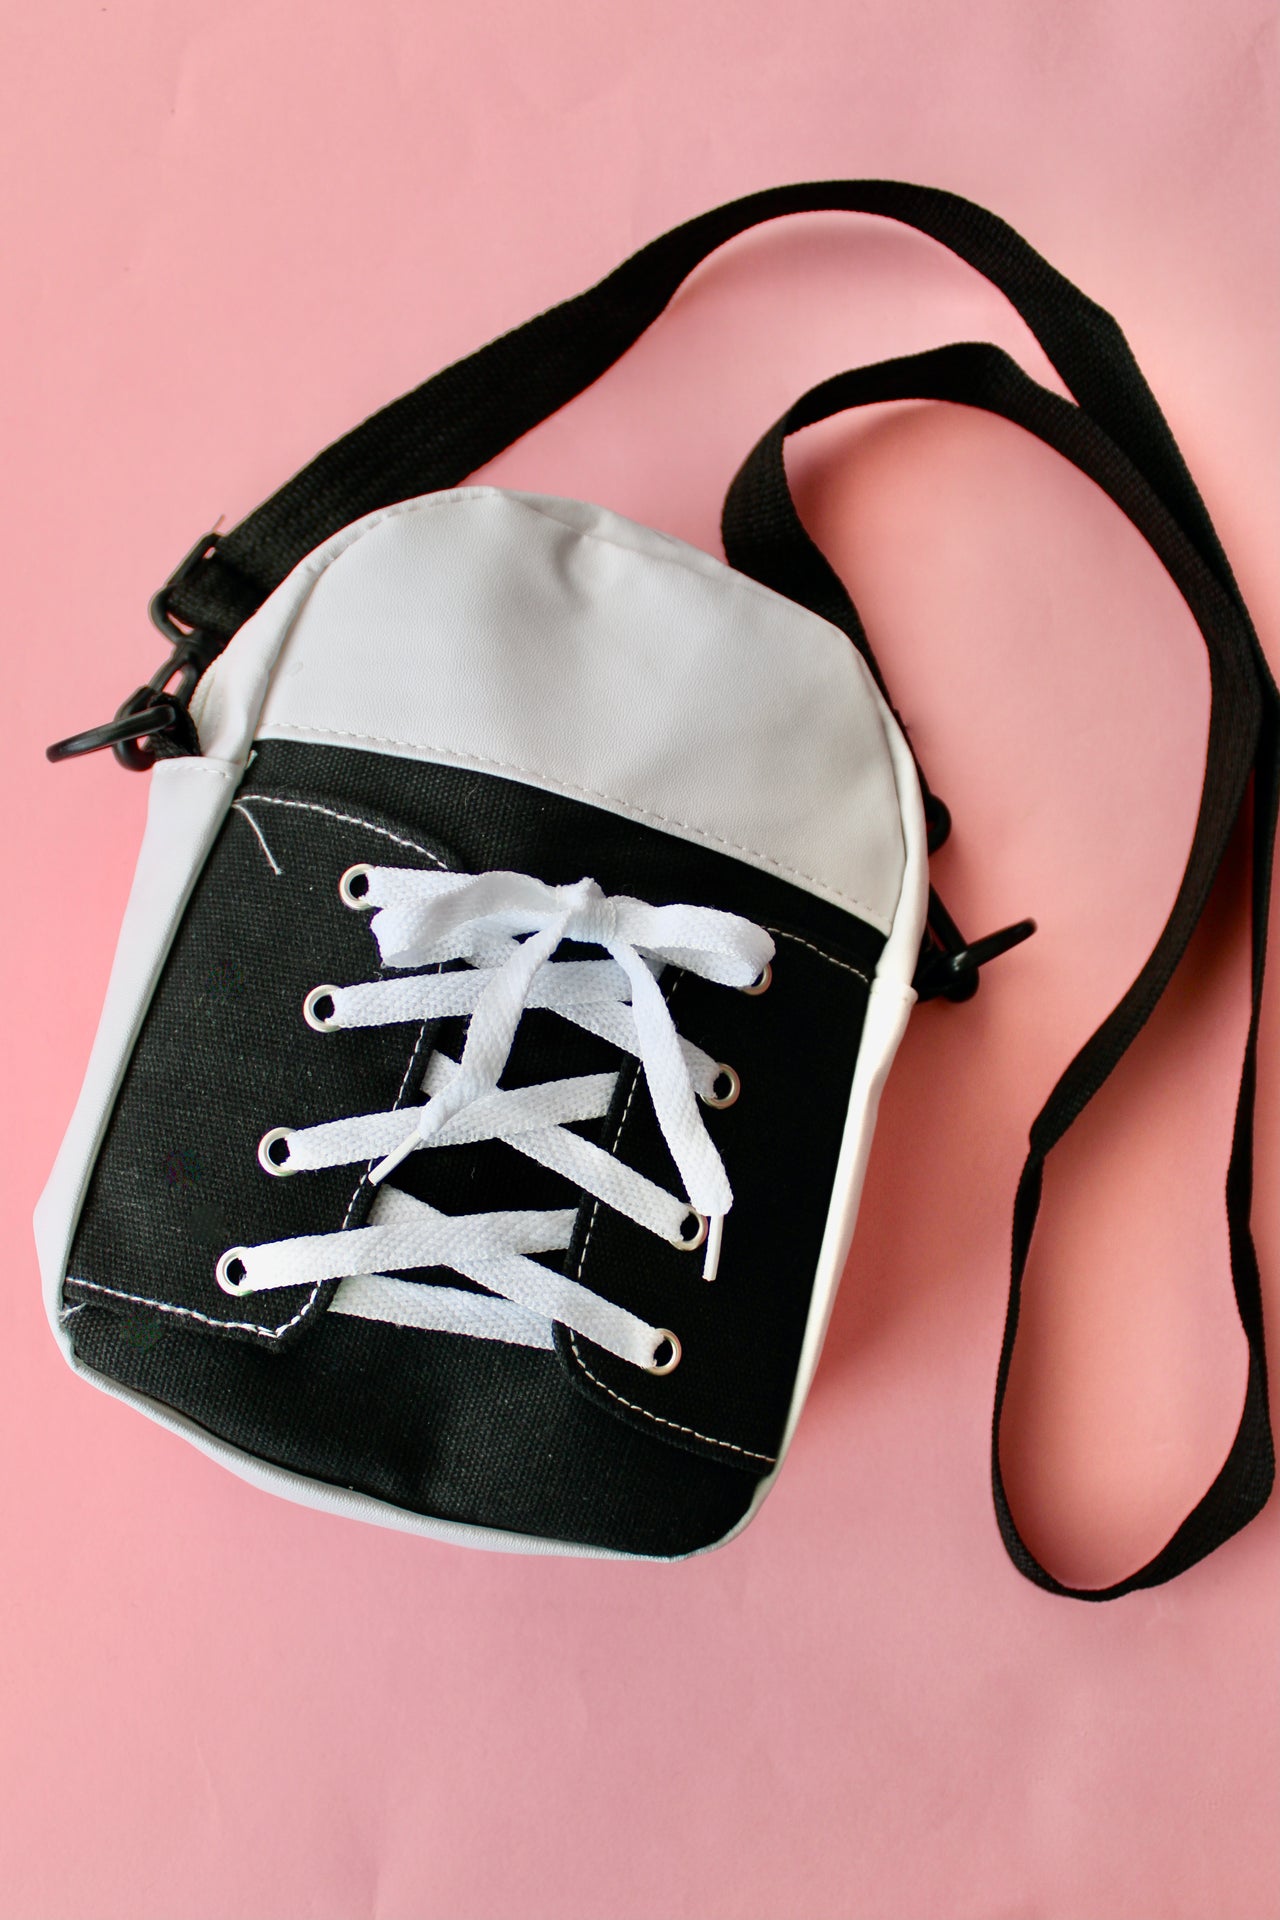 Converse Sneaker Bag